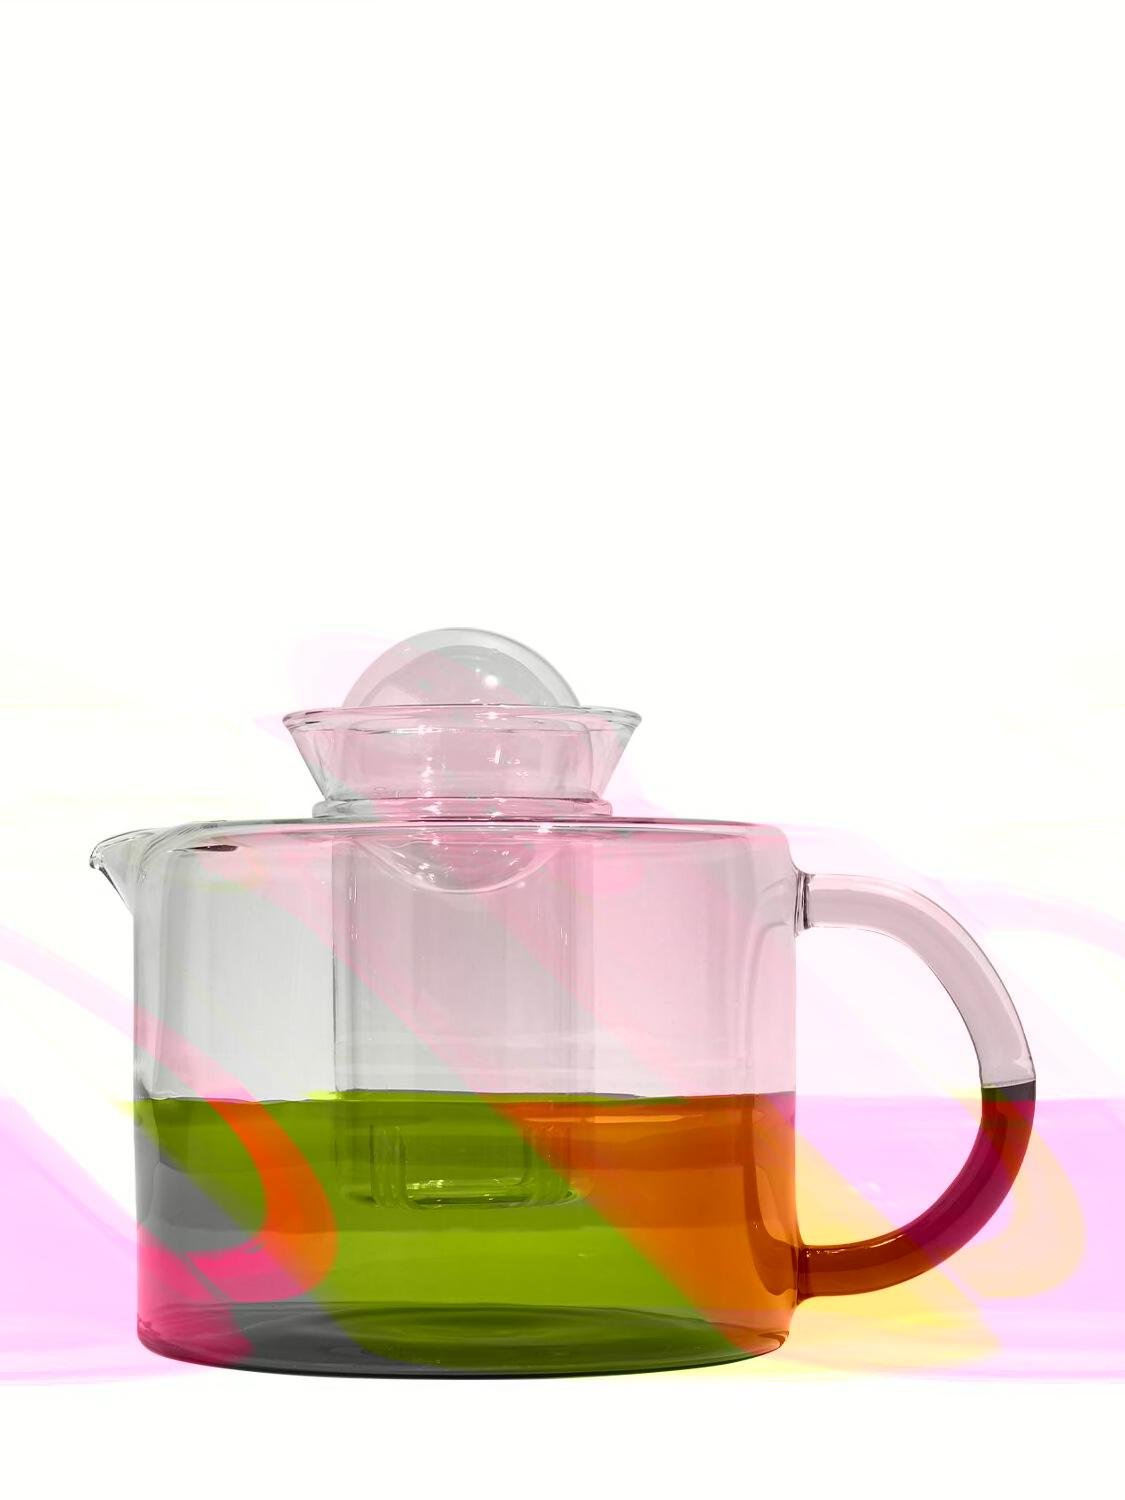 Two-tone Pink & Amber Tea Pot by FAZEEK